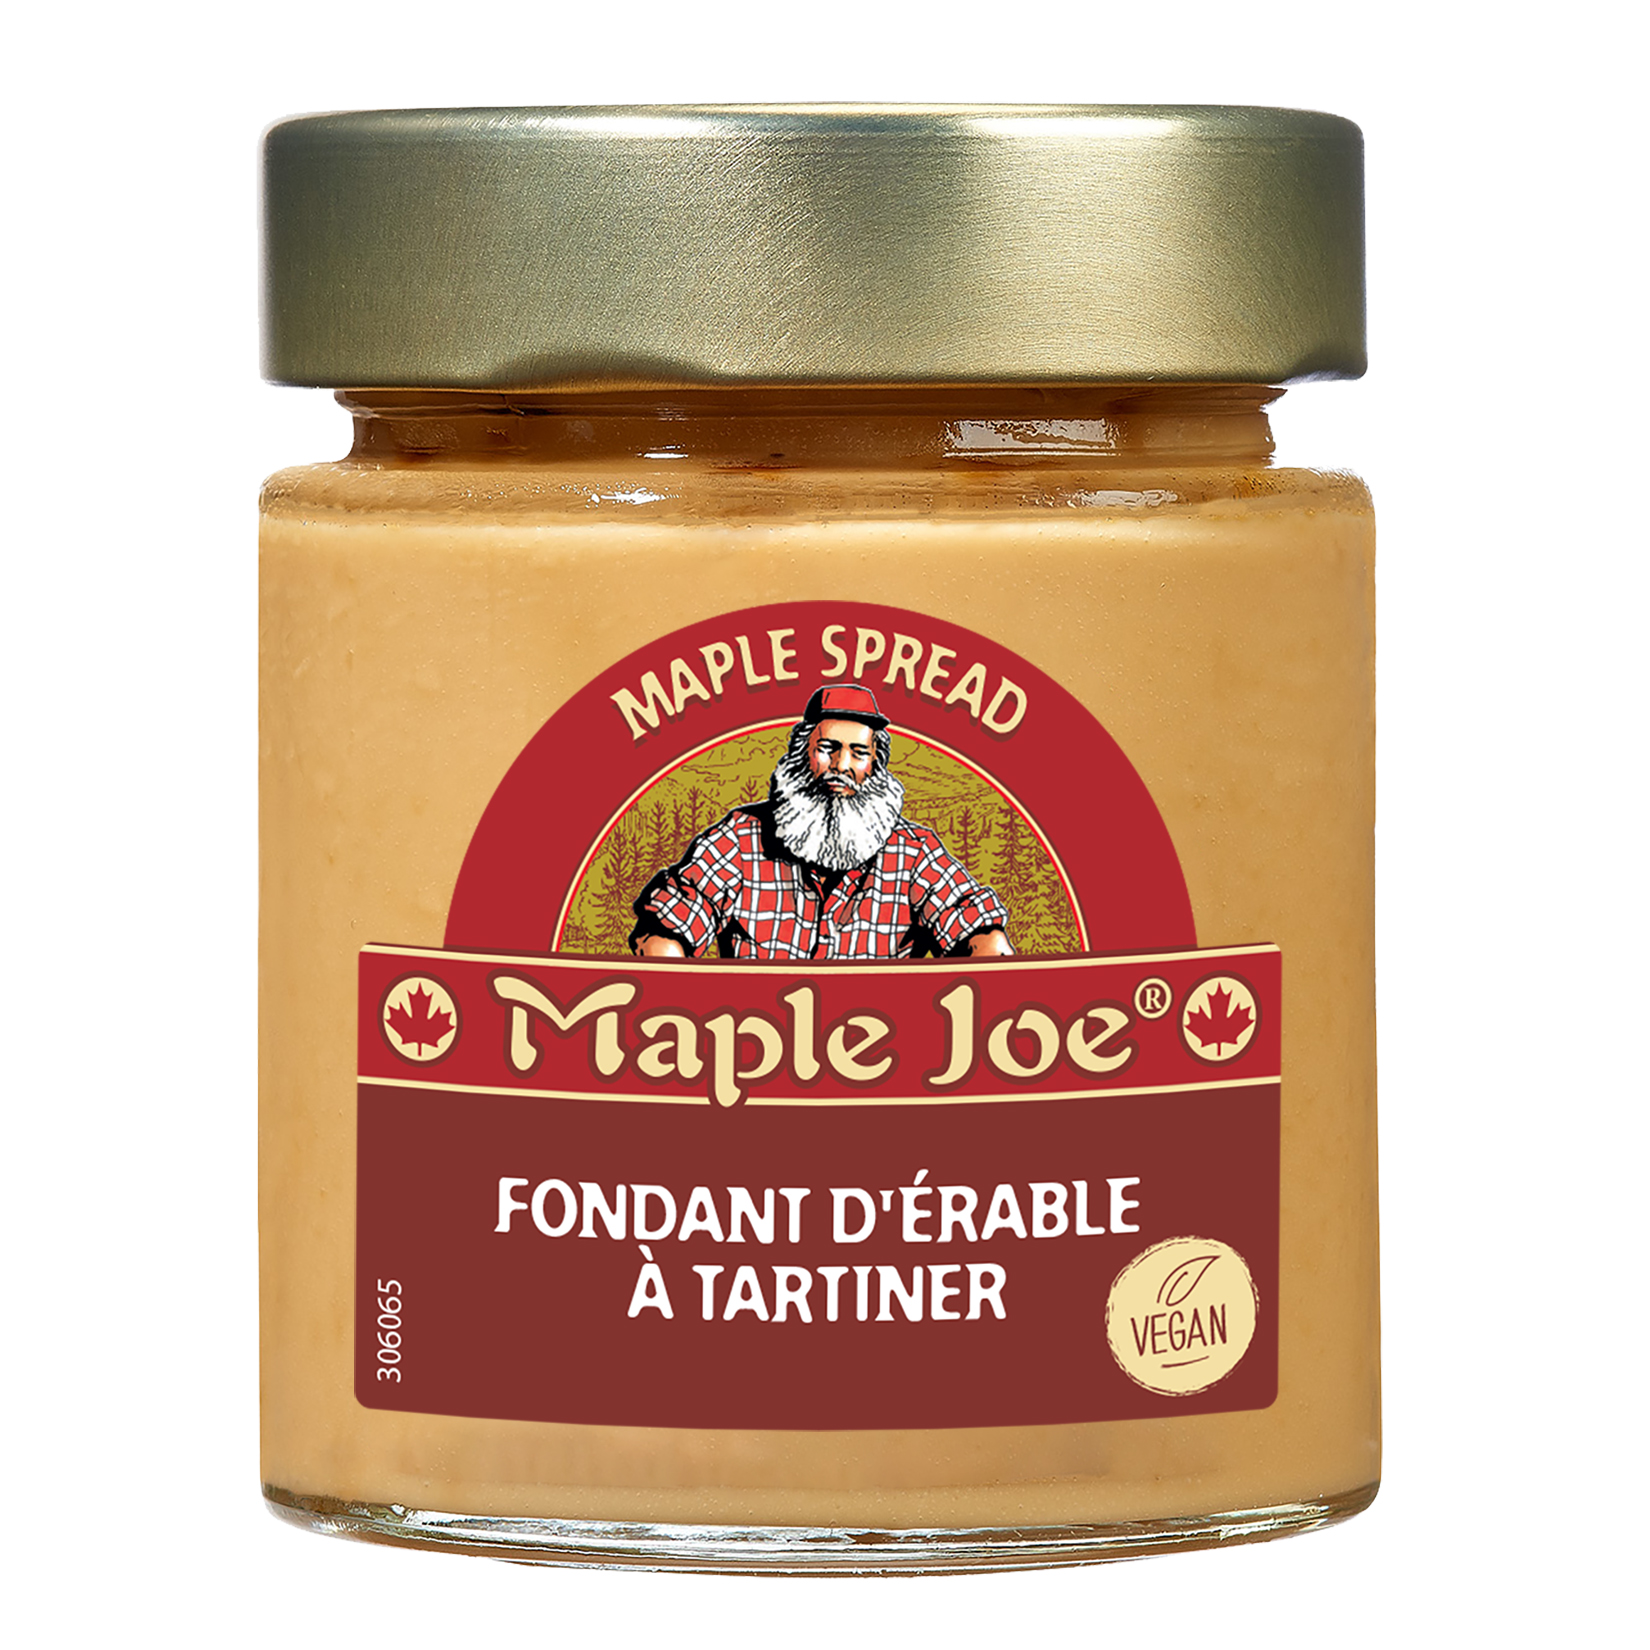 Maple Joe Fondant dCrable O tartiner - Le Fondant d’Érable Maple Joe